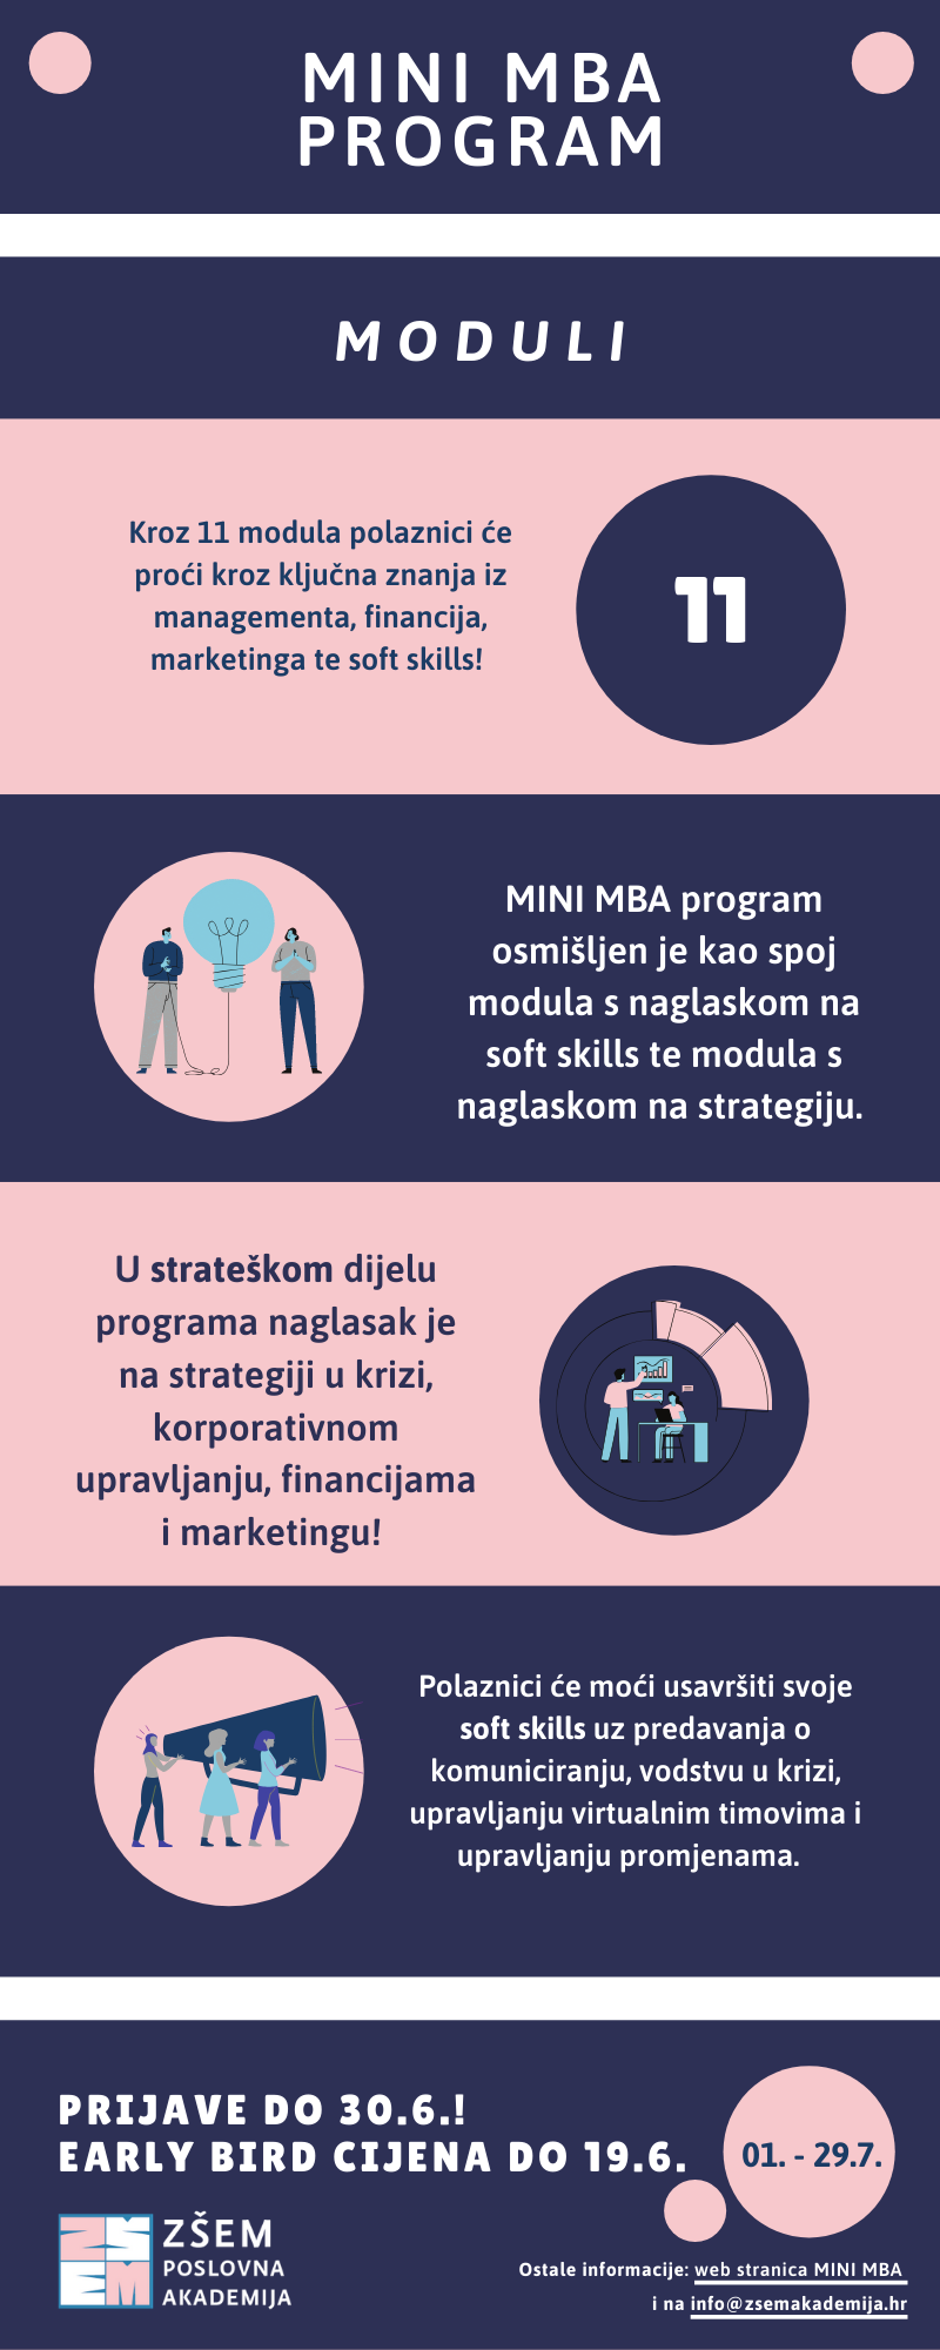 MINI MBA program